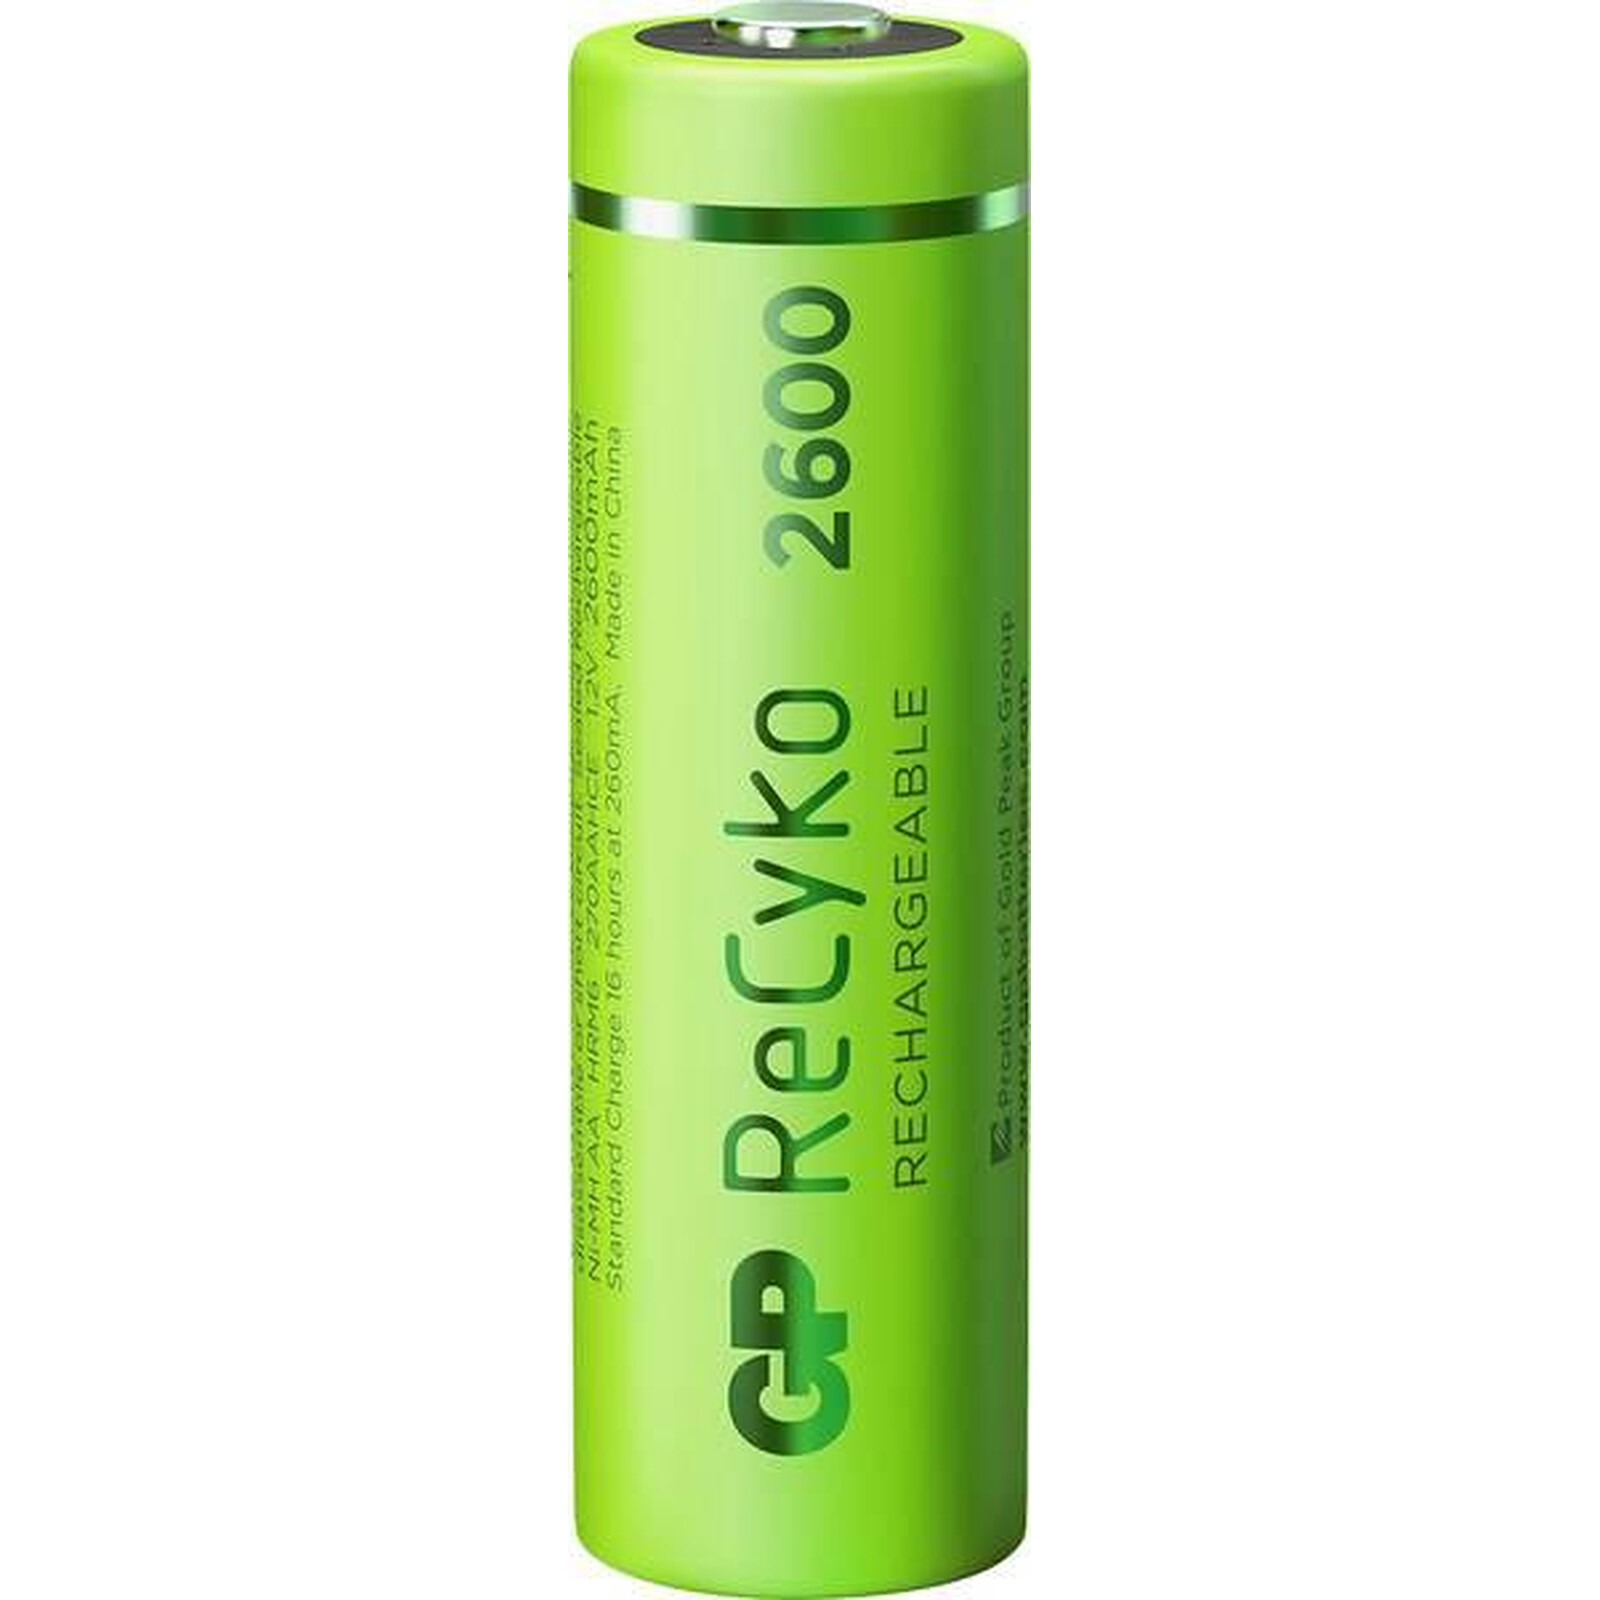 GP Batteries - Pack 4 piles rechargeables AA LR6 ReCyko 2600 mAh - Pile &  chargeur - LDLC